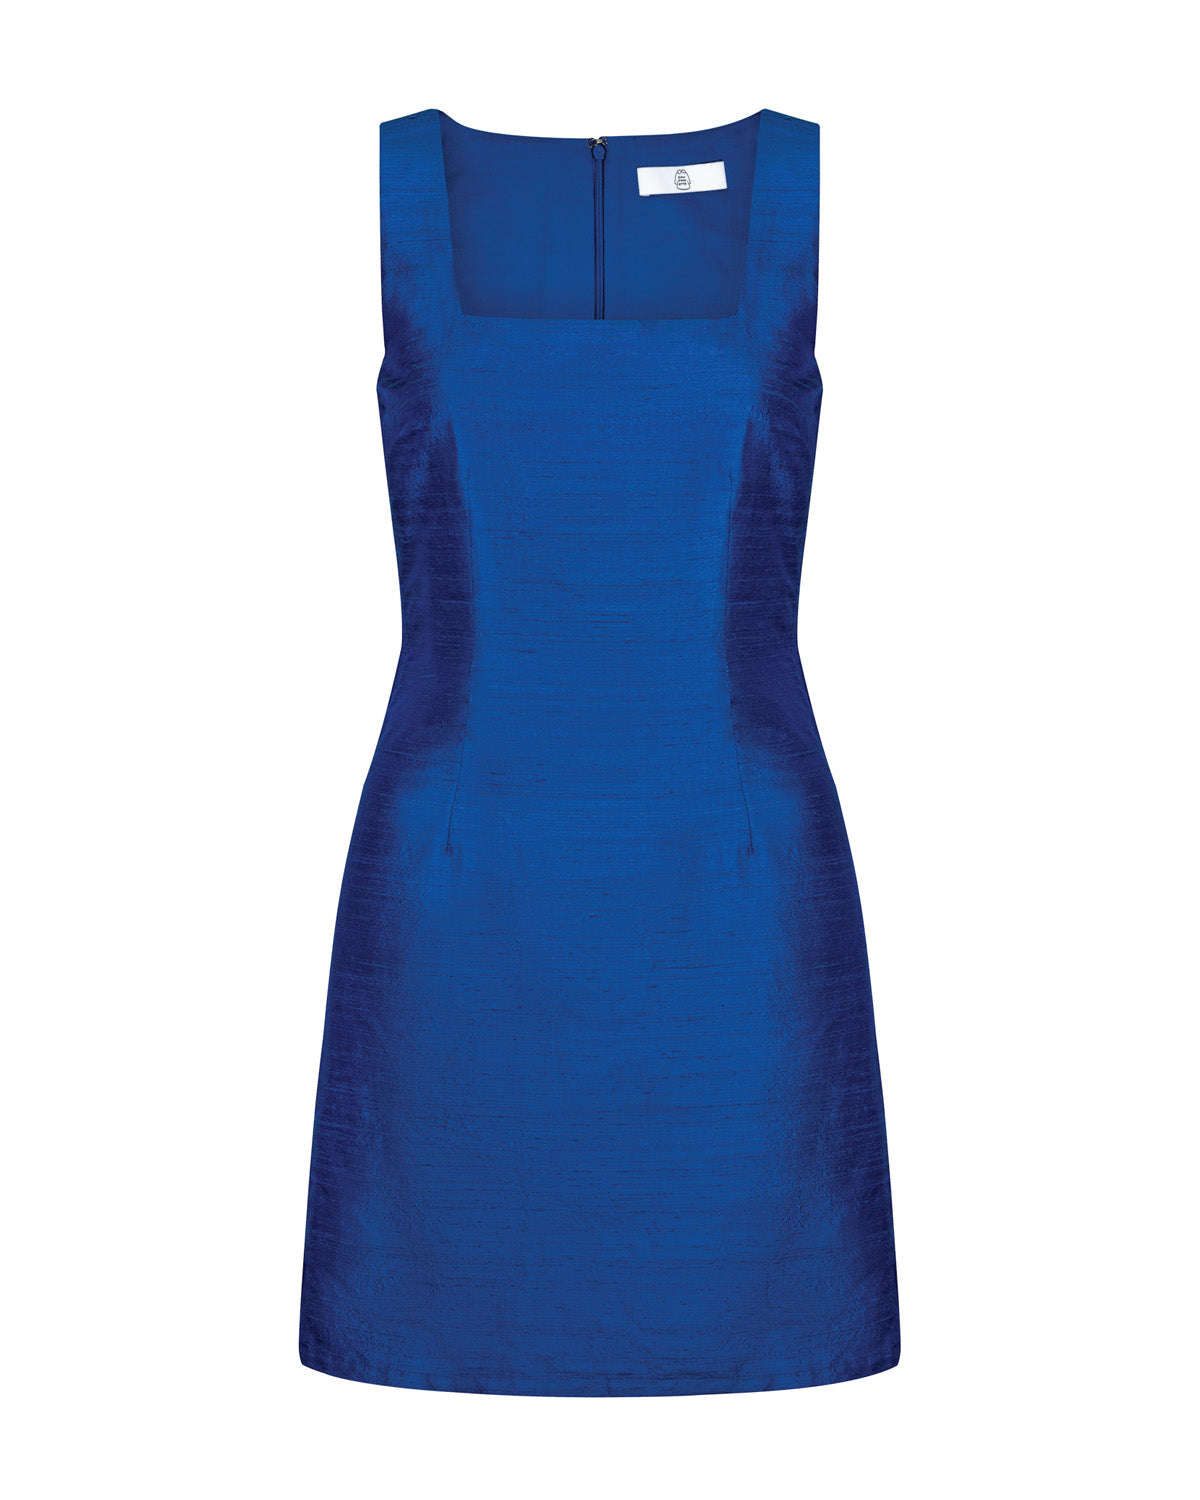 the perfectly cut mini dress in vibrant cobalt blue silk dupioni. 100% silk. Square neckline and invisible back zipper. Made in New York.